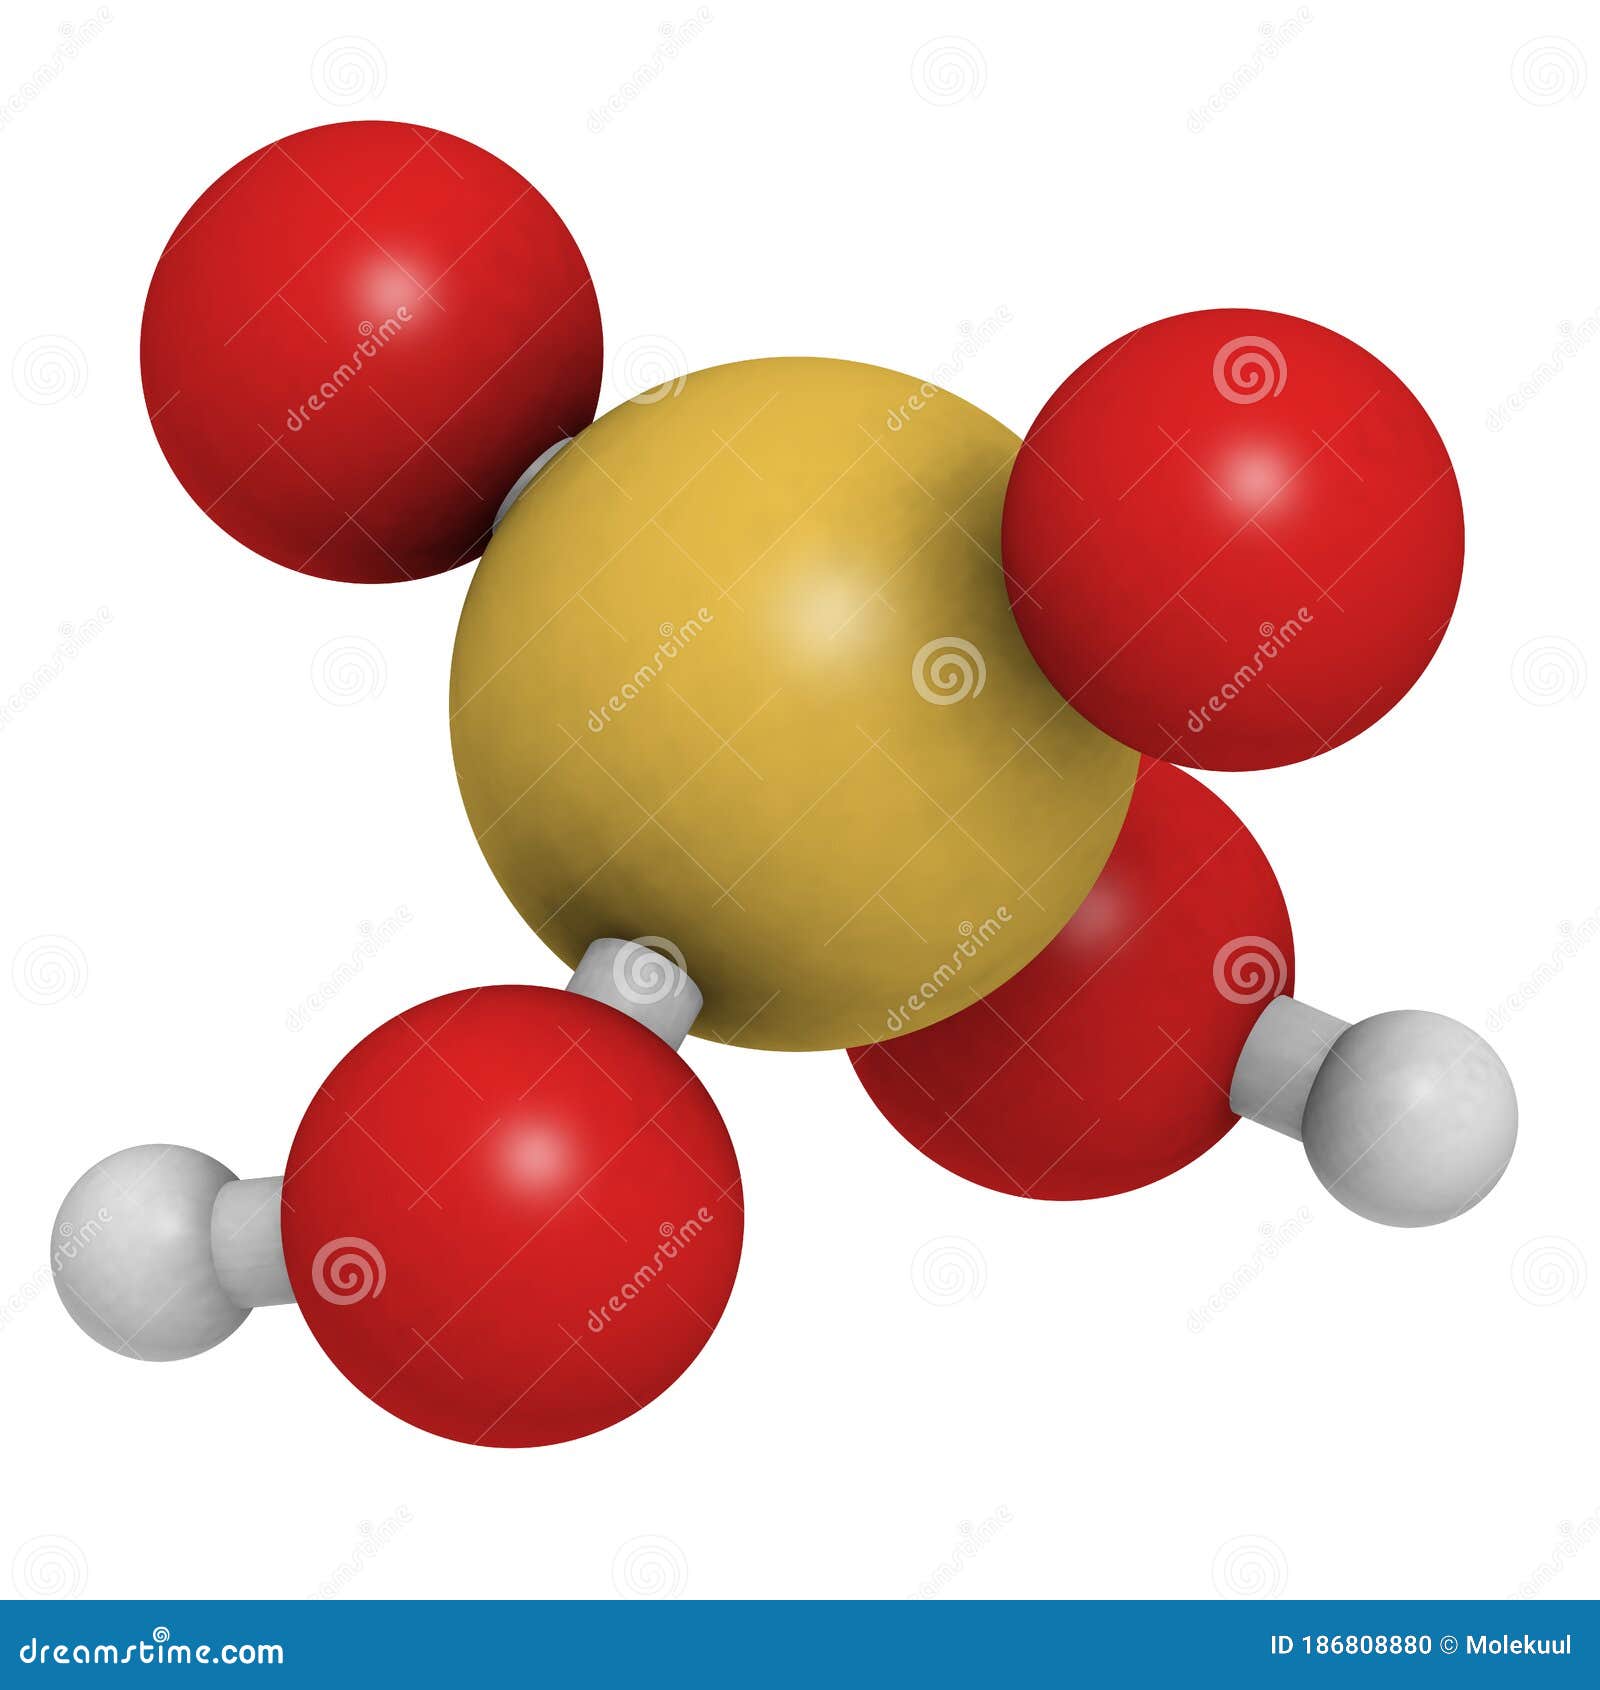 H2so4 Acid sulfuric